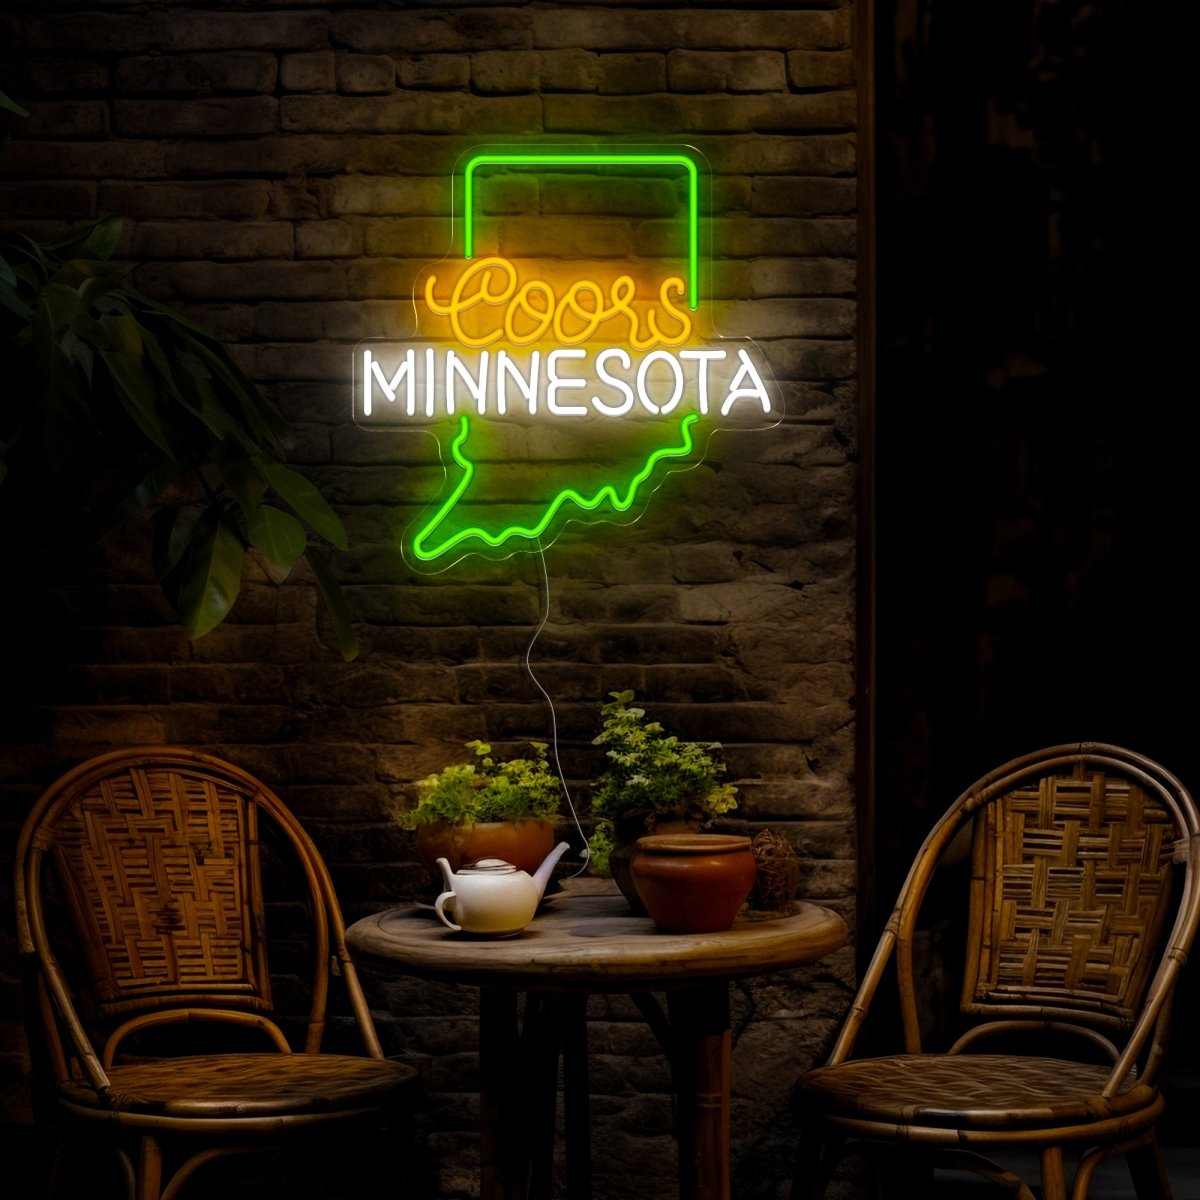 Coors American Minnesota Maps Neon Sign - Reels Custom